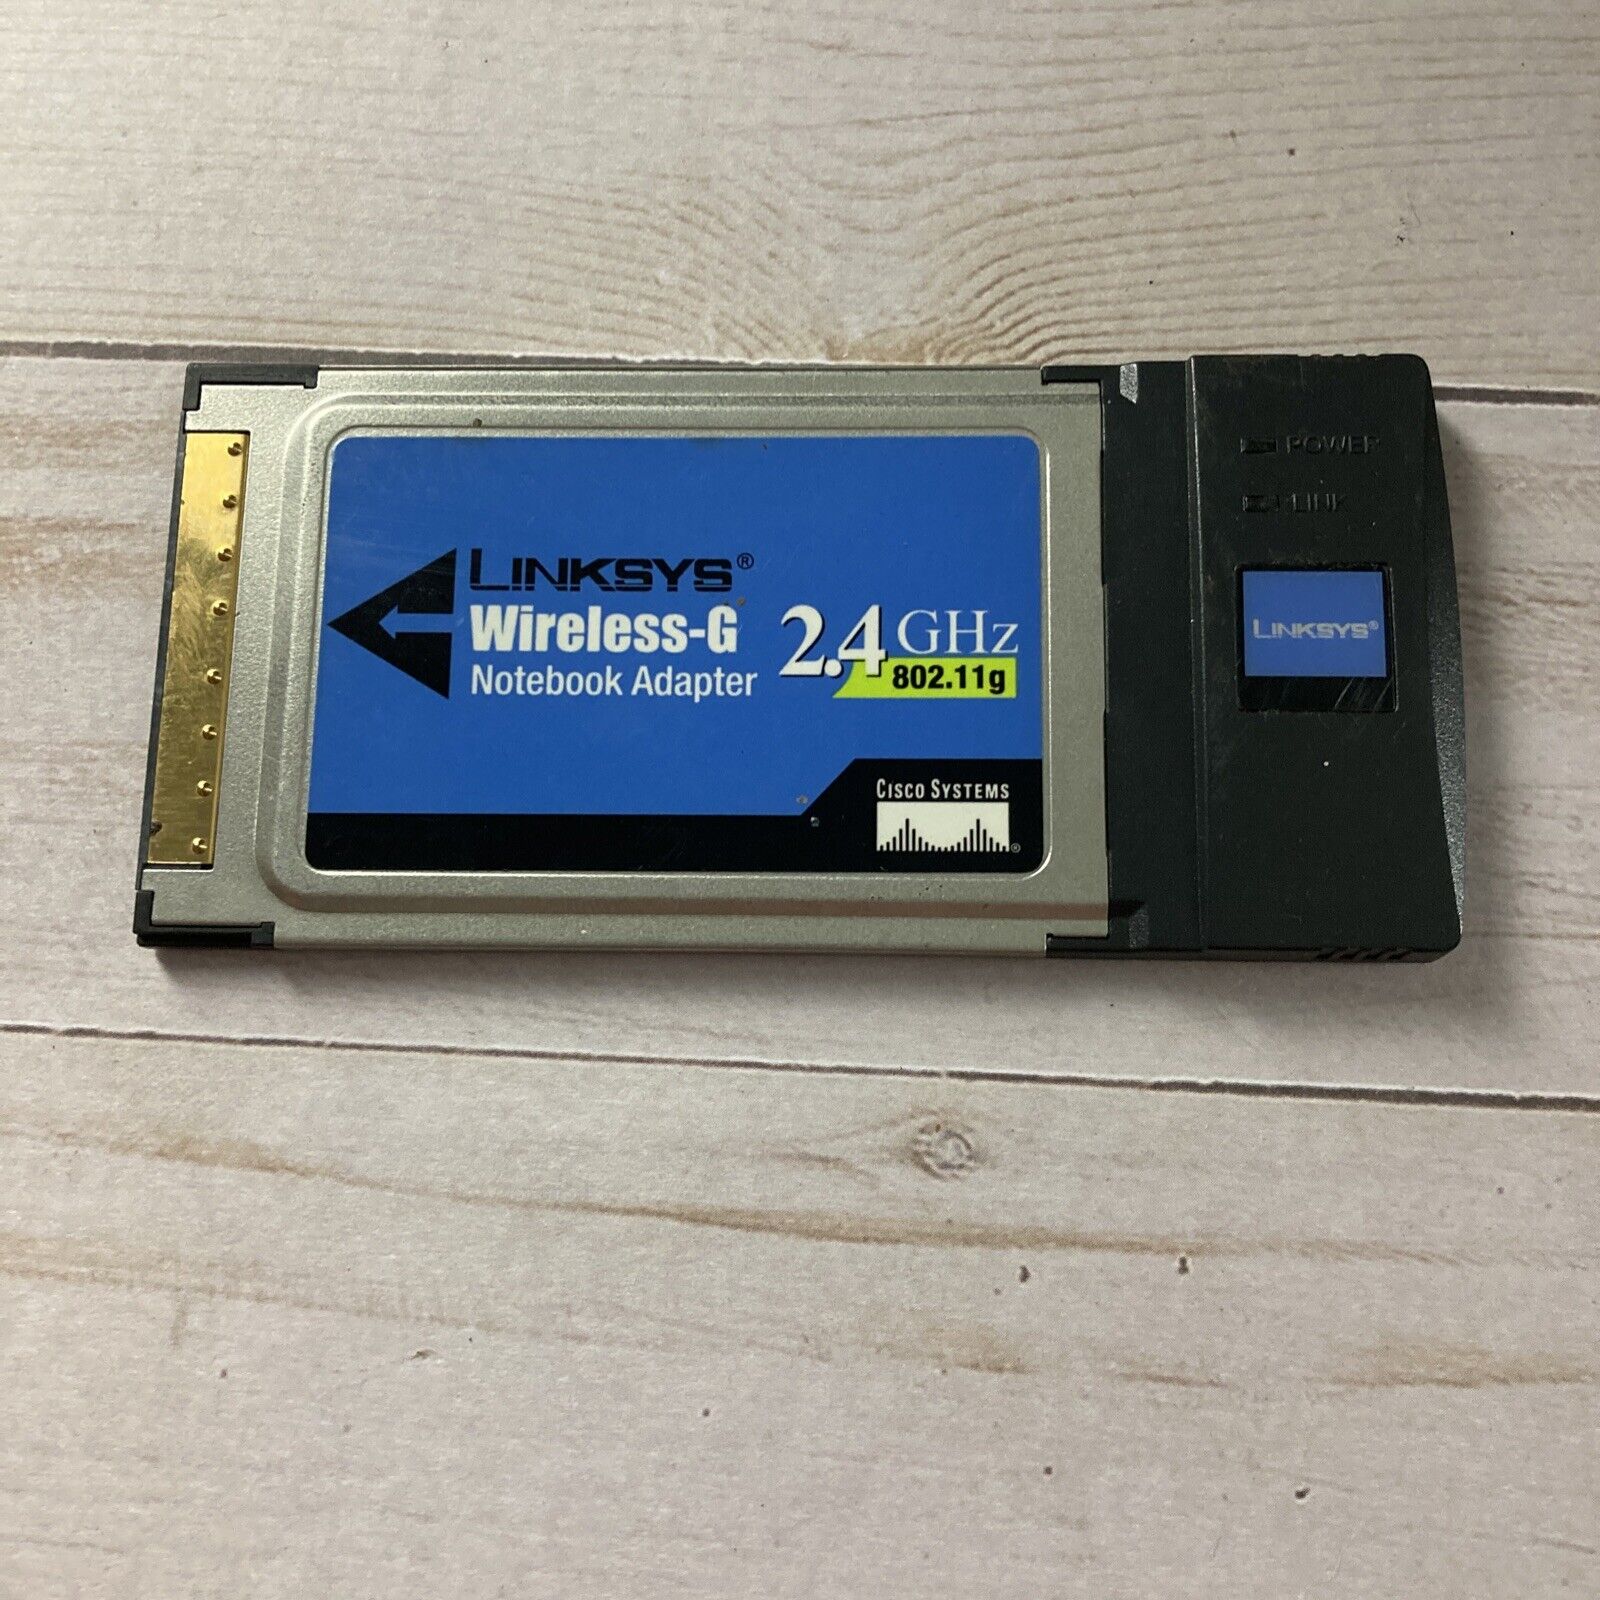 Linksys Wireless-G 2.4GHz Notebook Adapter WPC54G v3 802.11g